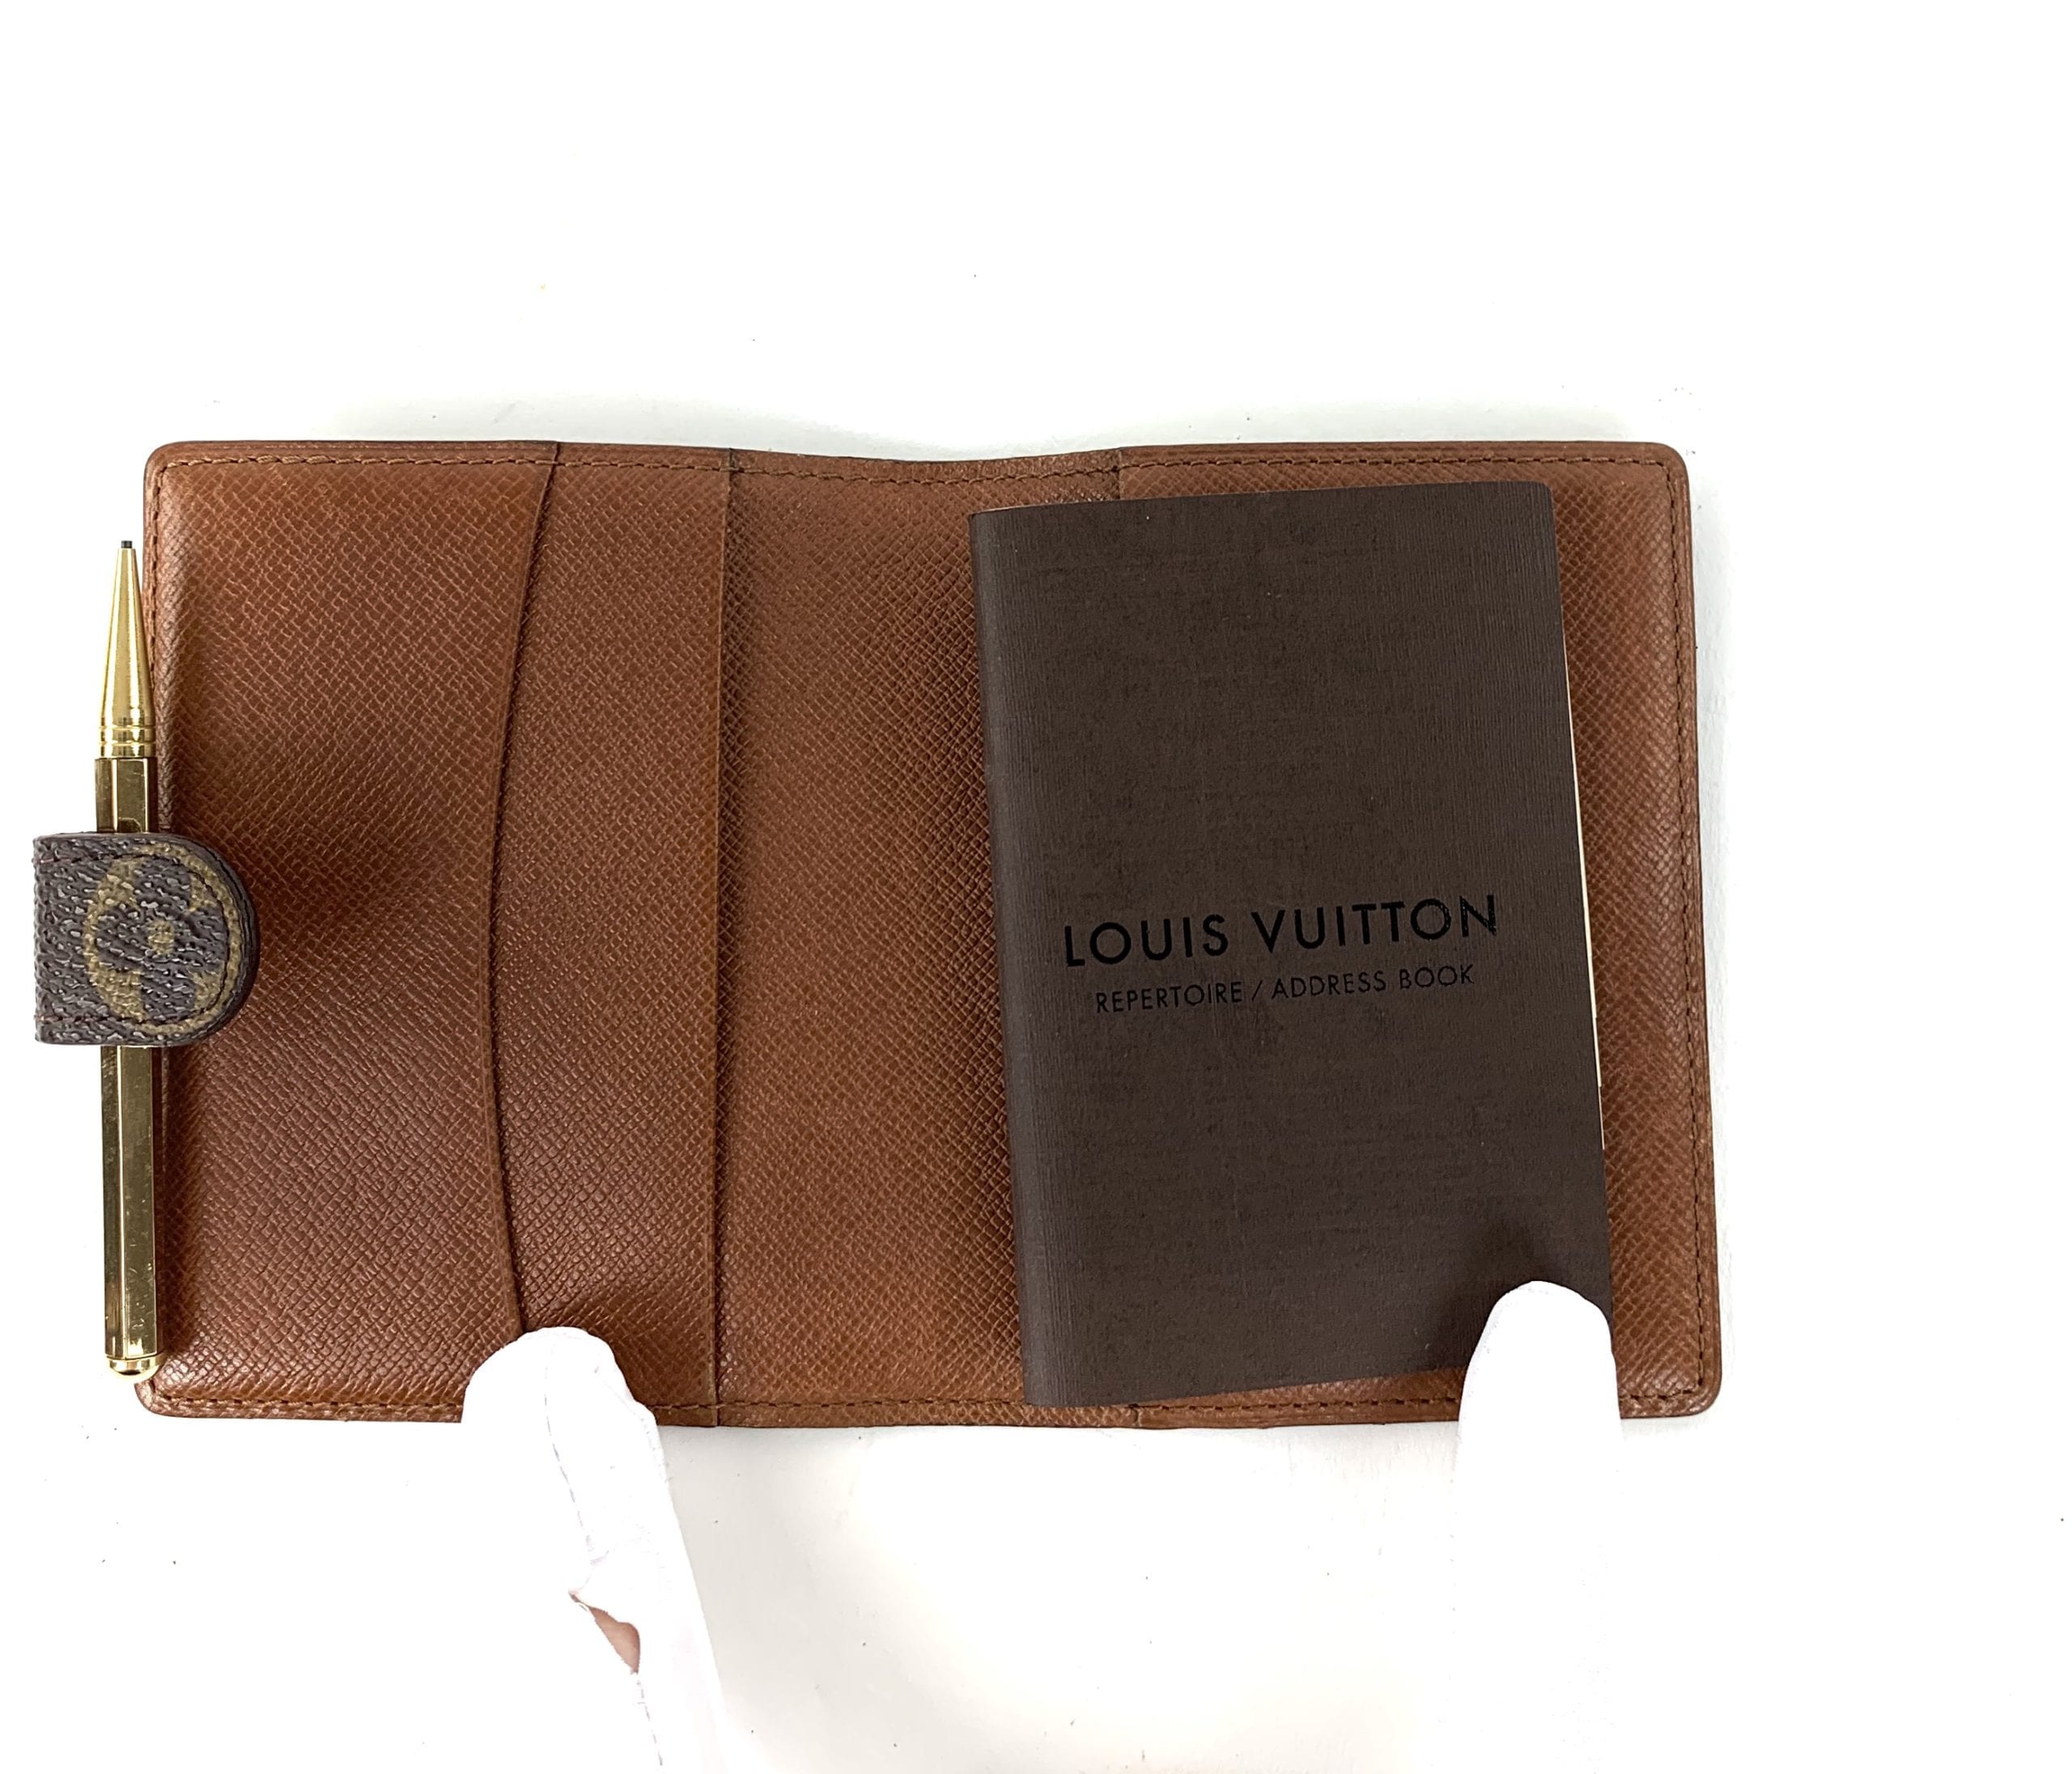 LOUIS VUITTON Saks Fifth Avenue Wallet Agenda Credit Card Organizer